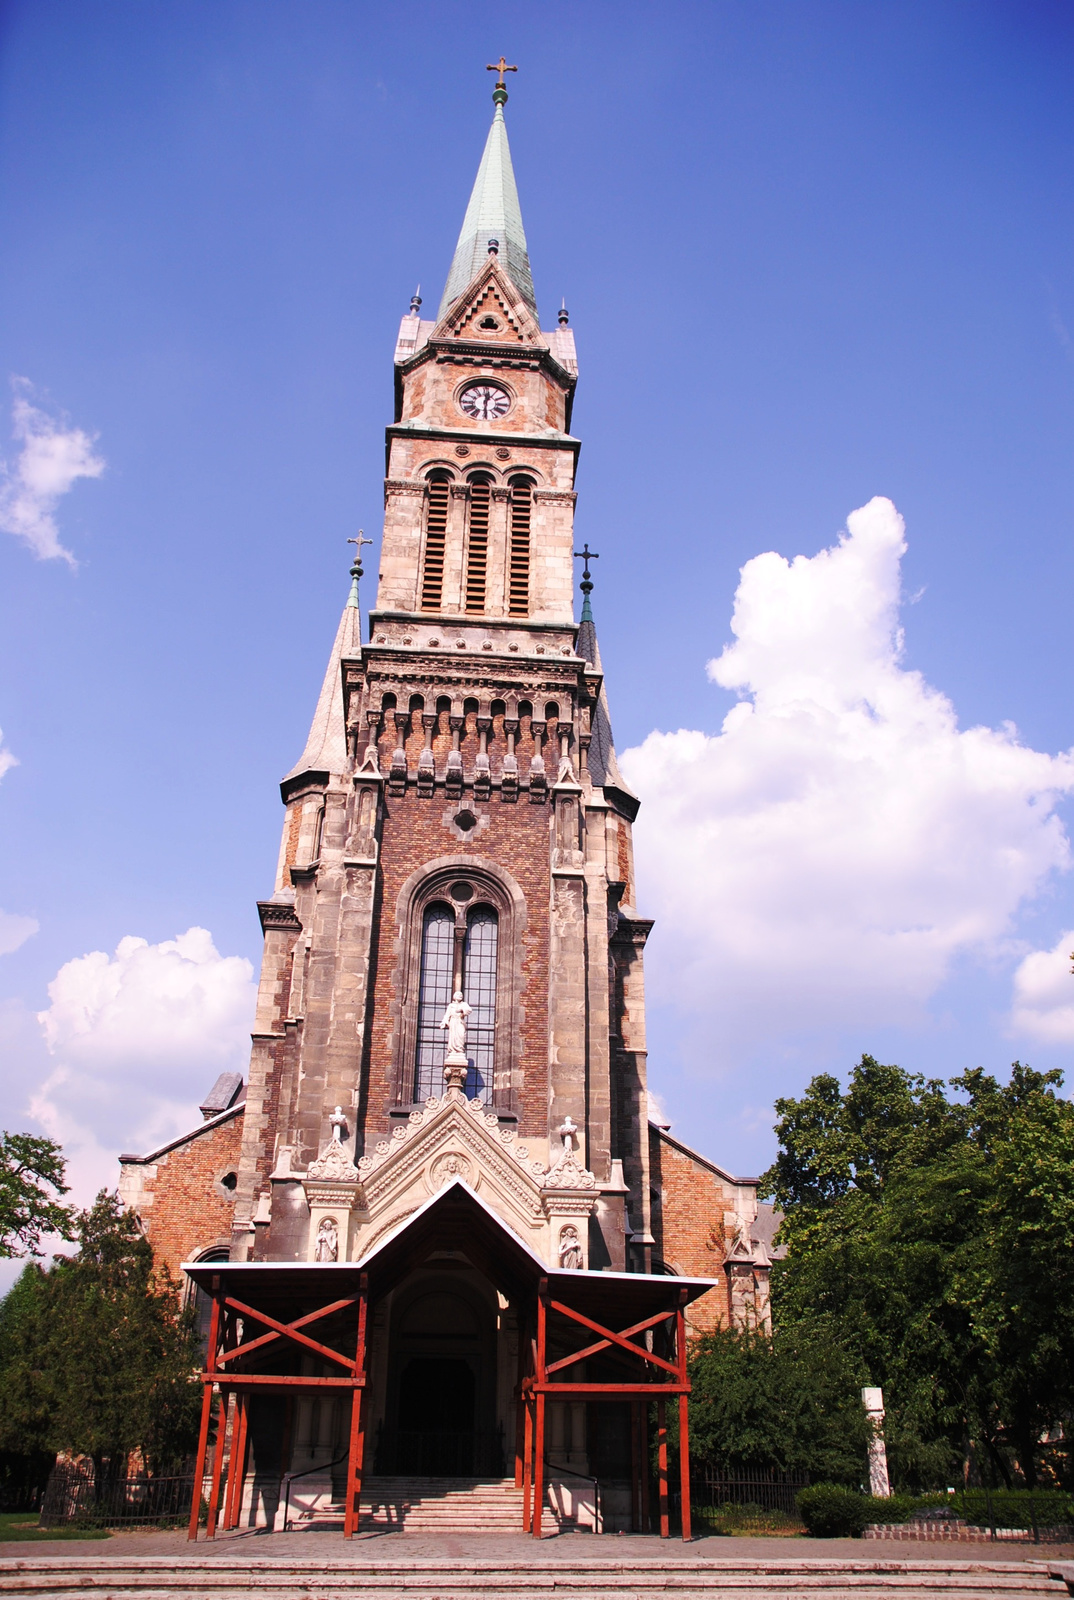 Szent Ferenc templom